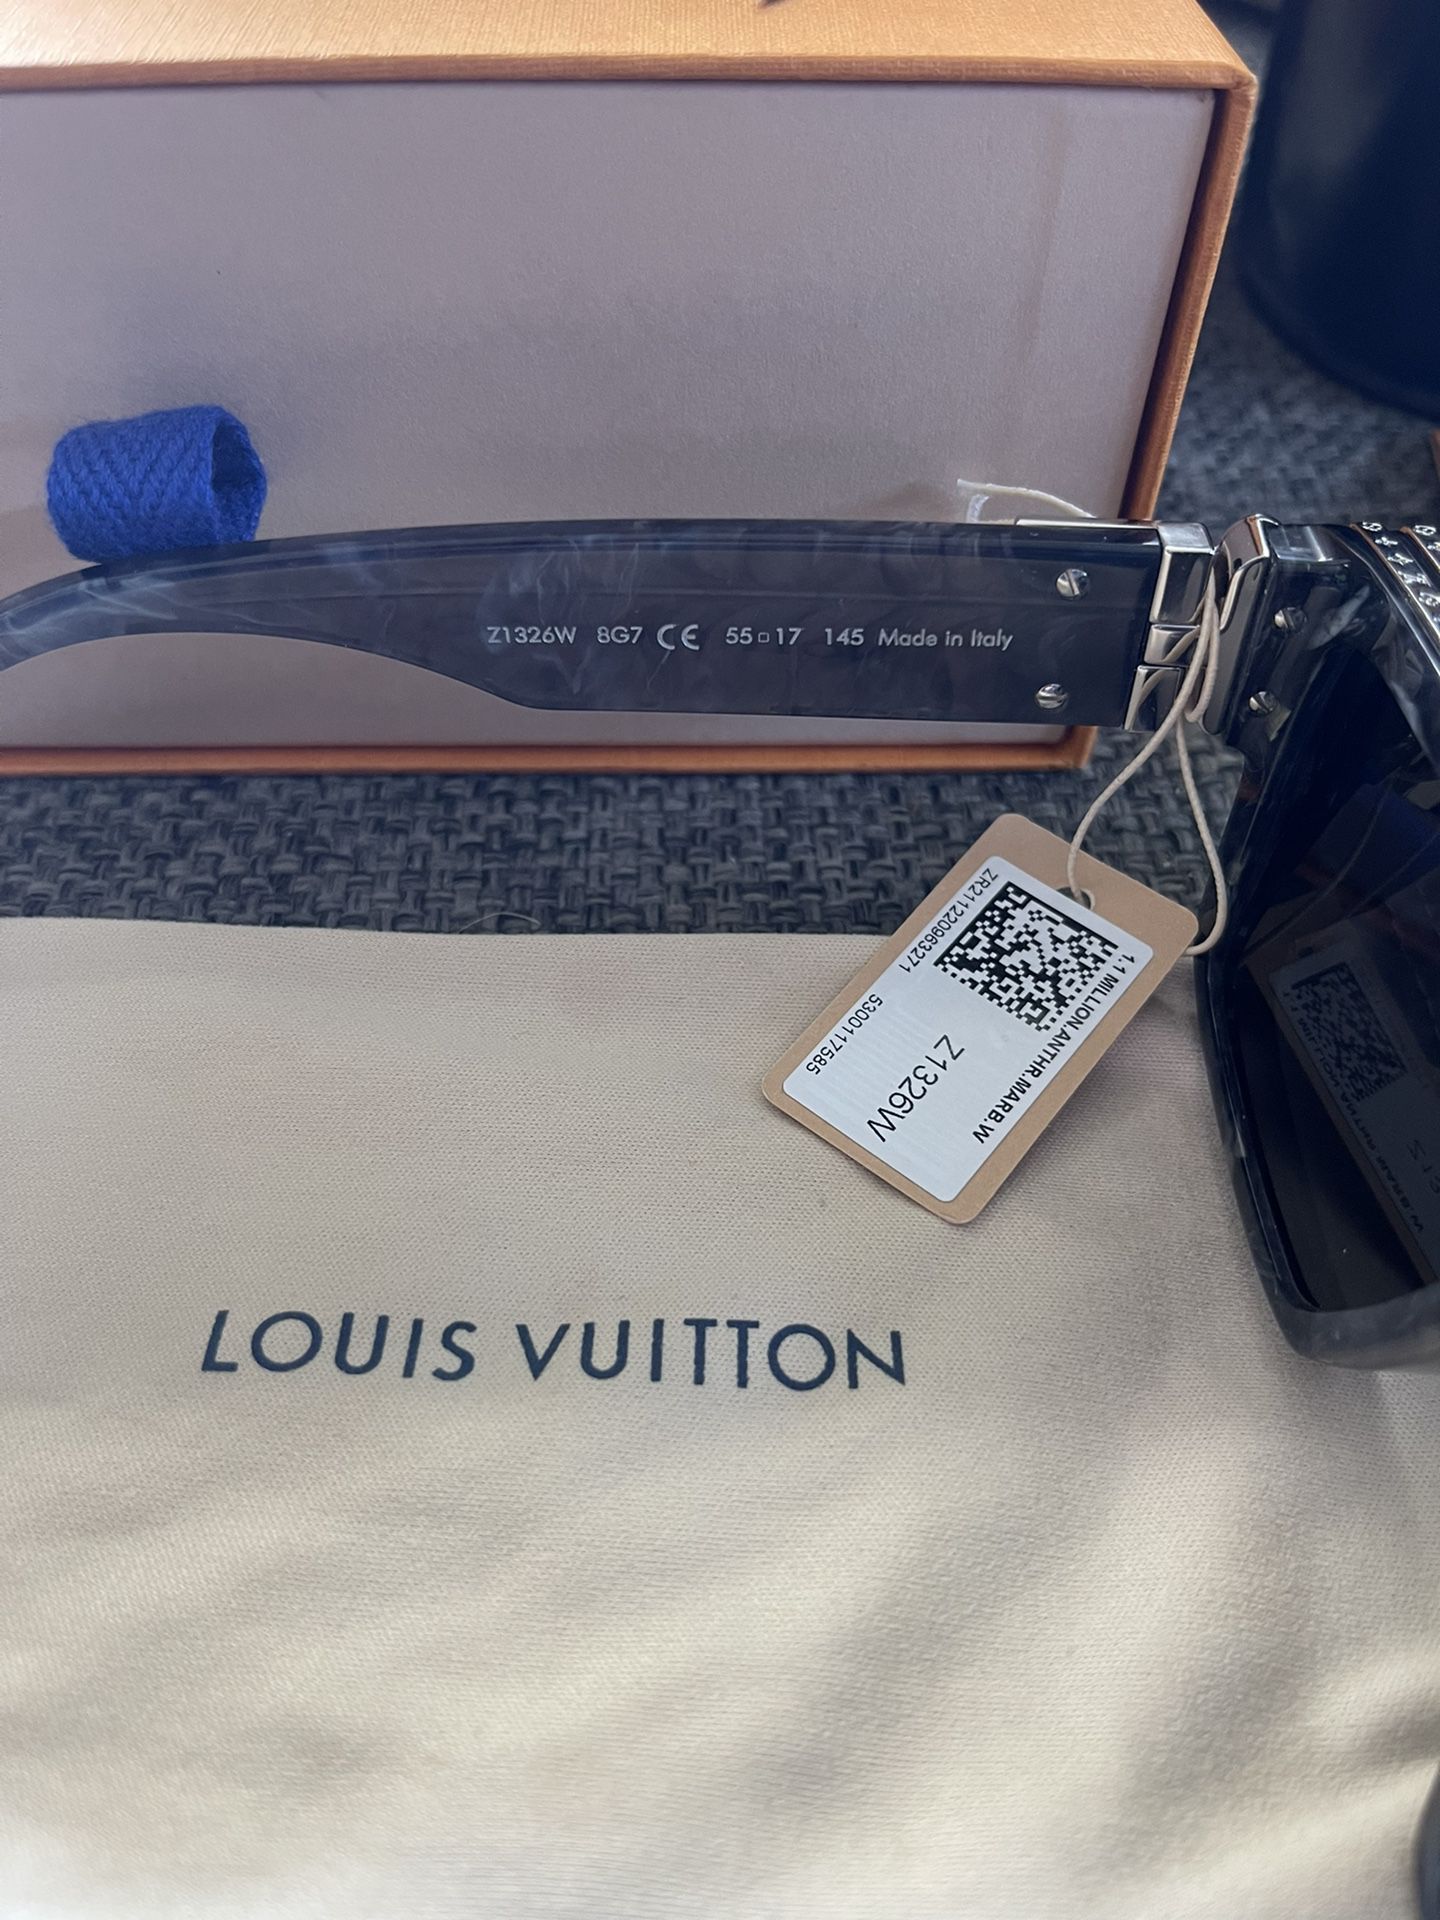 Louis Vuitton Millionaire Shades for Sale in Ridgefield, NJ - OfferUp